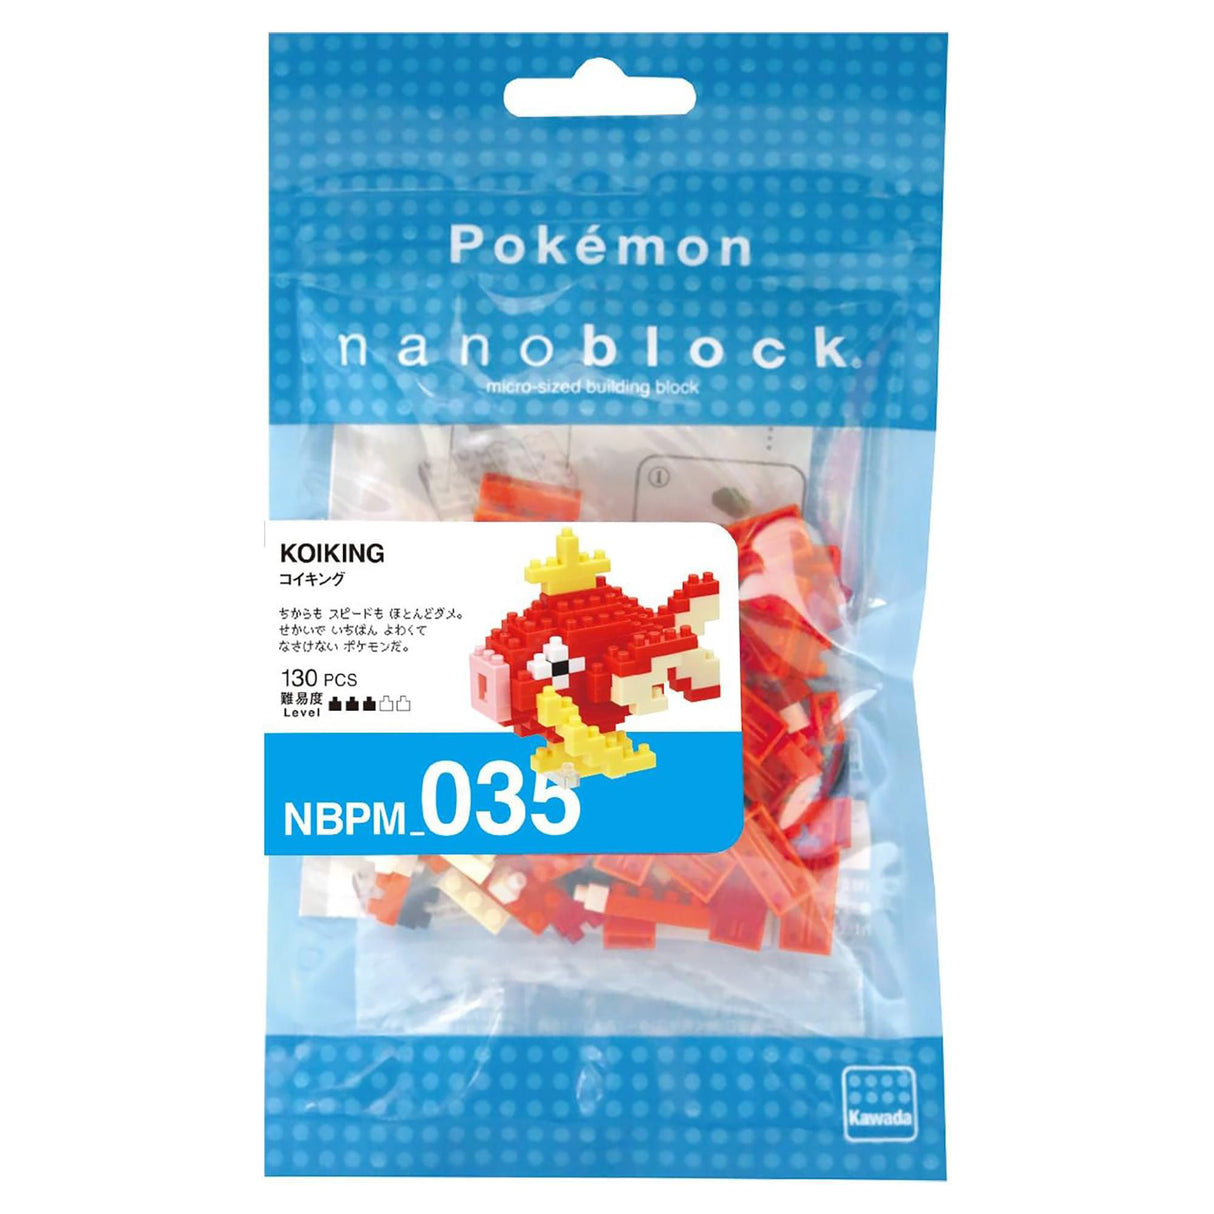 nanoblock x Pokemon Nanoblock Pokemon - Magikarp